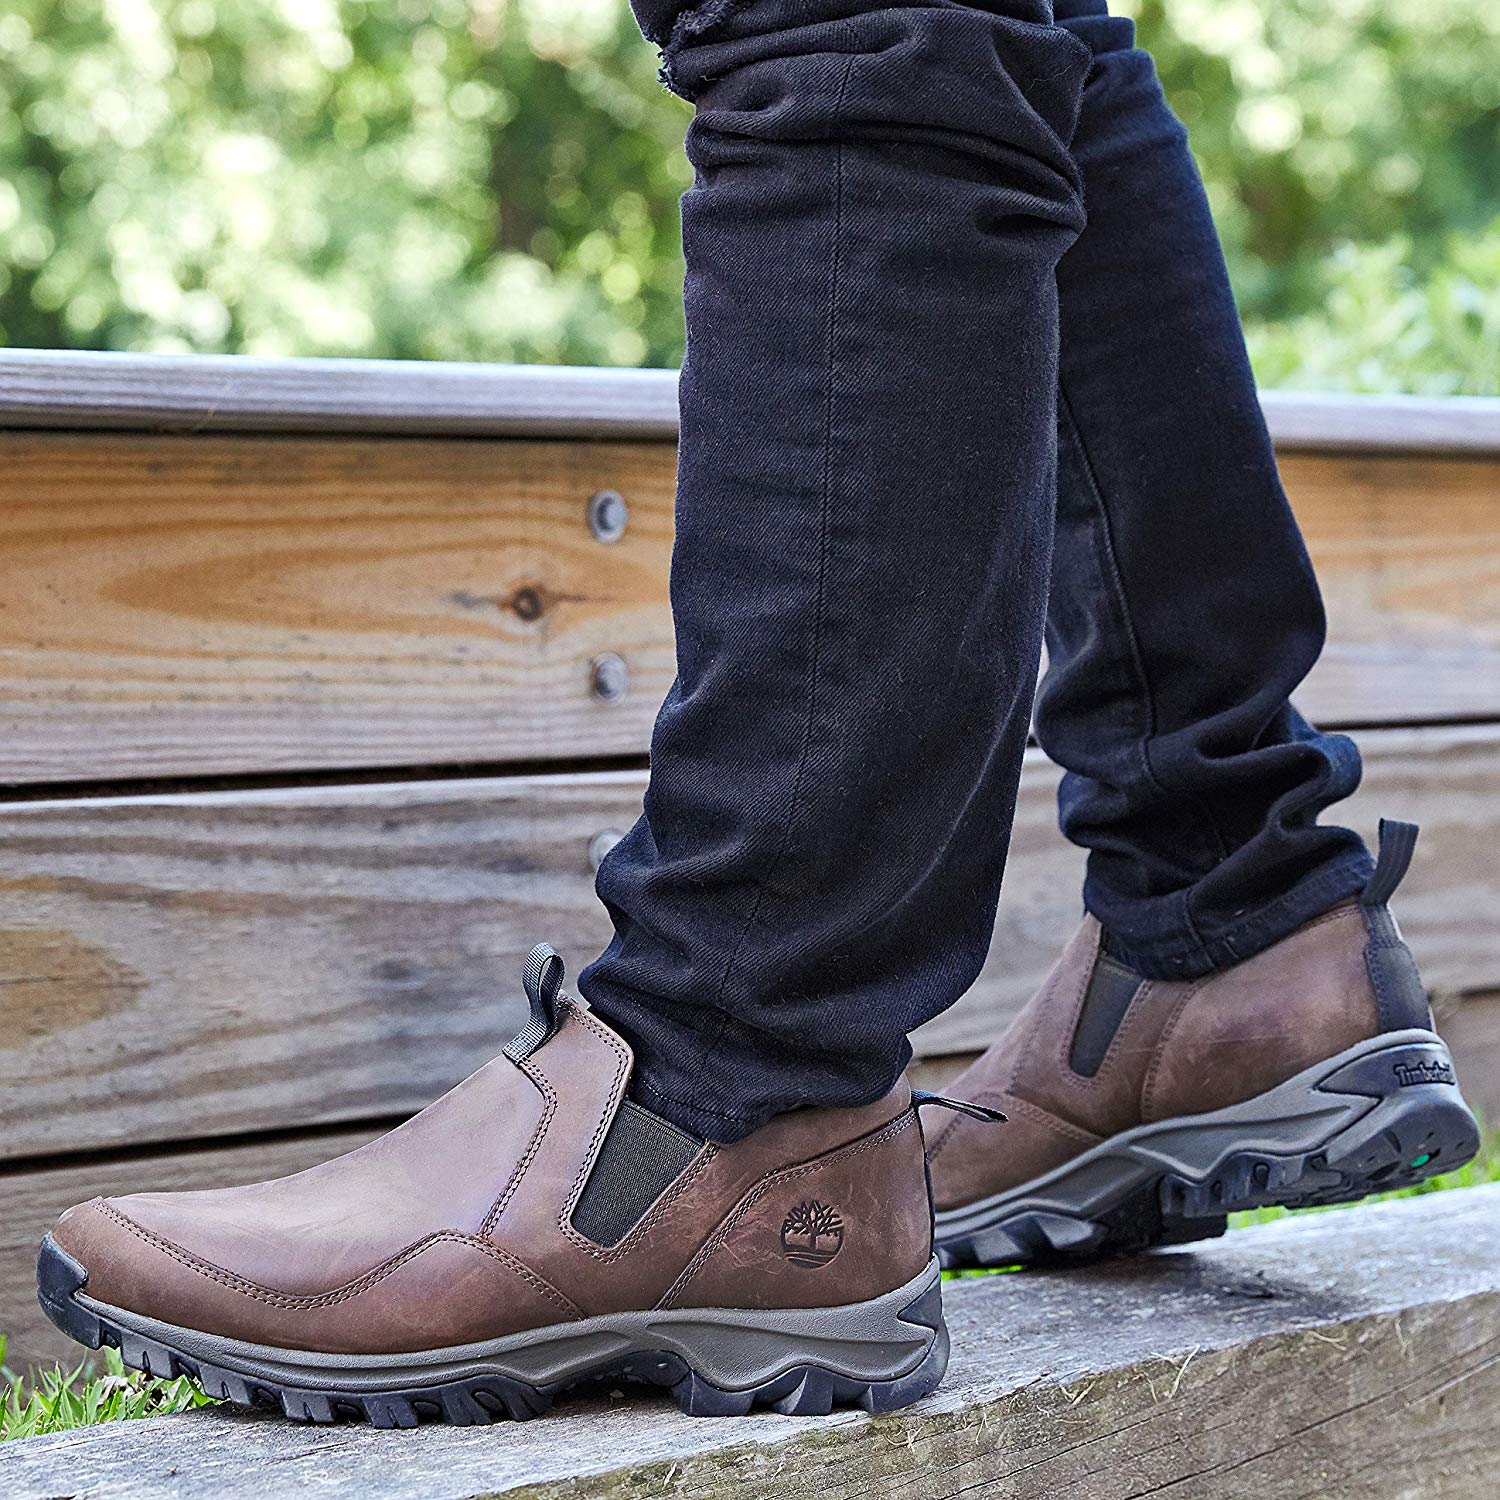 Timberland Men's Mt. Maddsen Slip on Hiking Shoe, Dark Brown, Size 13.0 ...